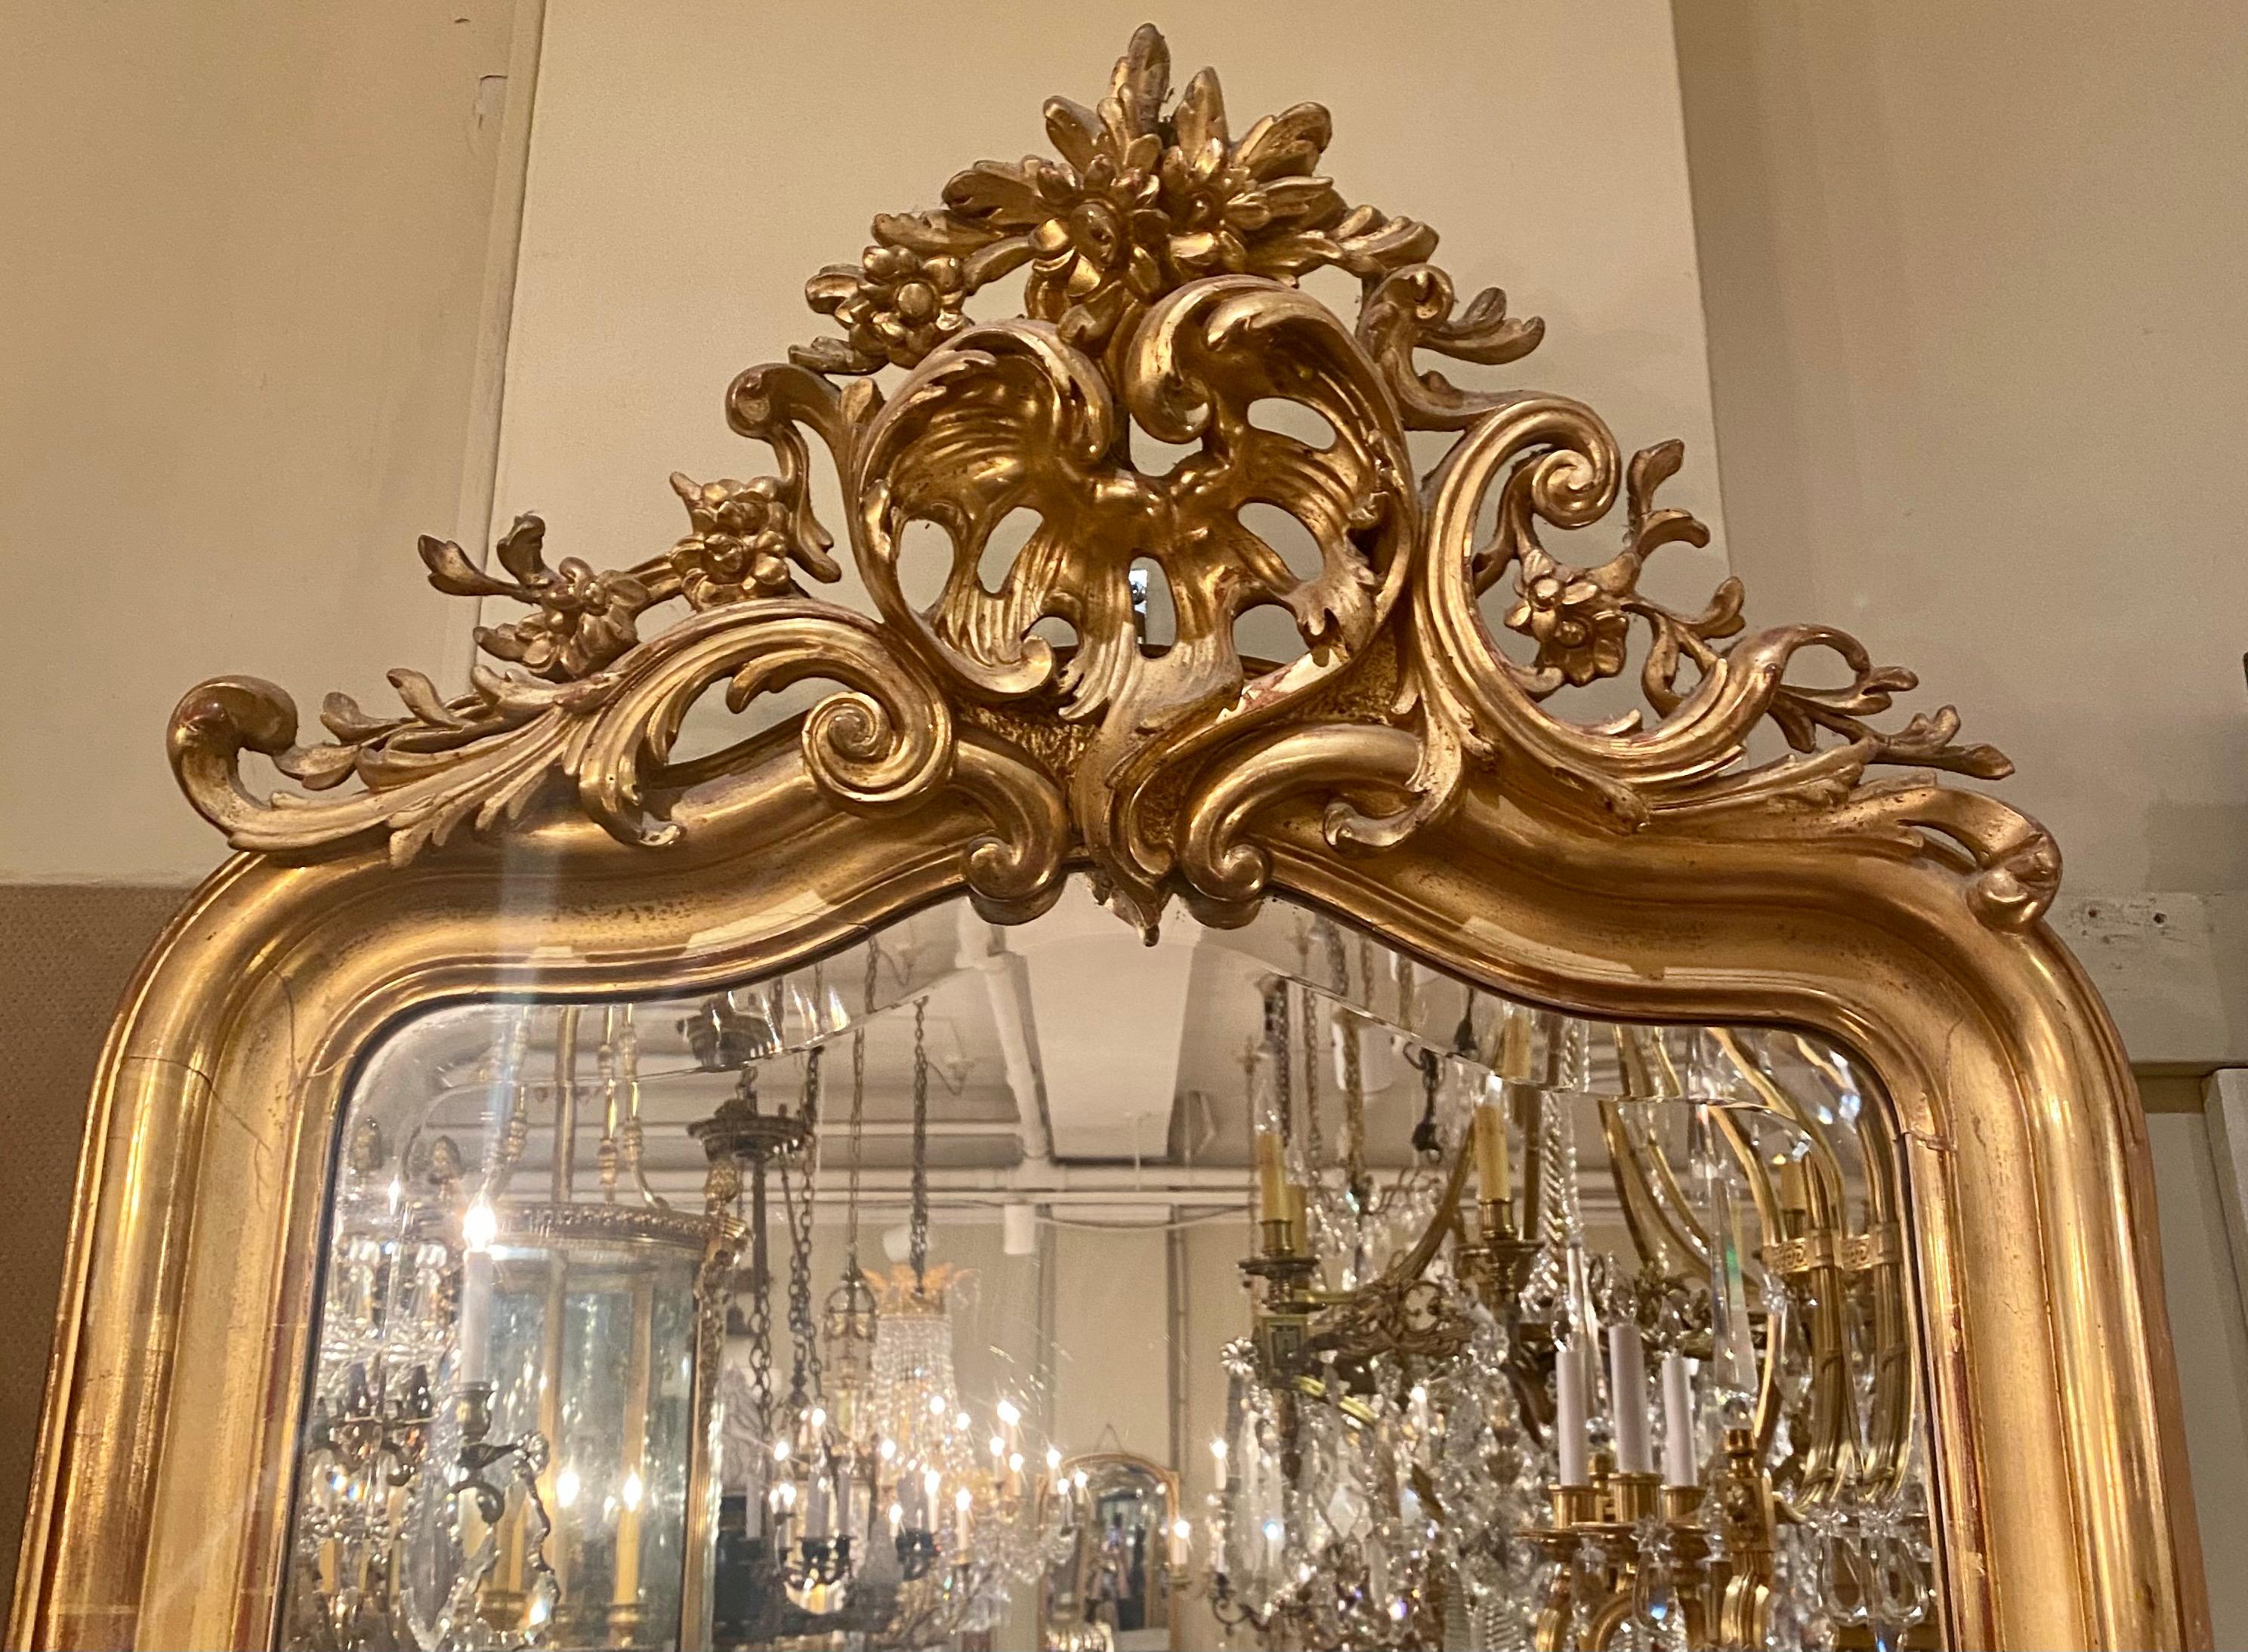 Antique French Louis XV gold leaf beveled mirror, circa 1870

MIR225.